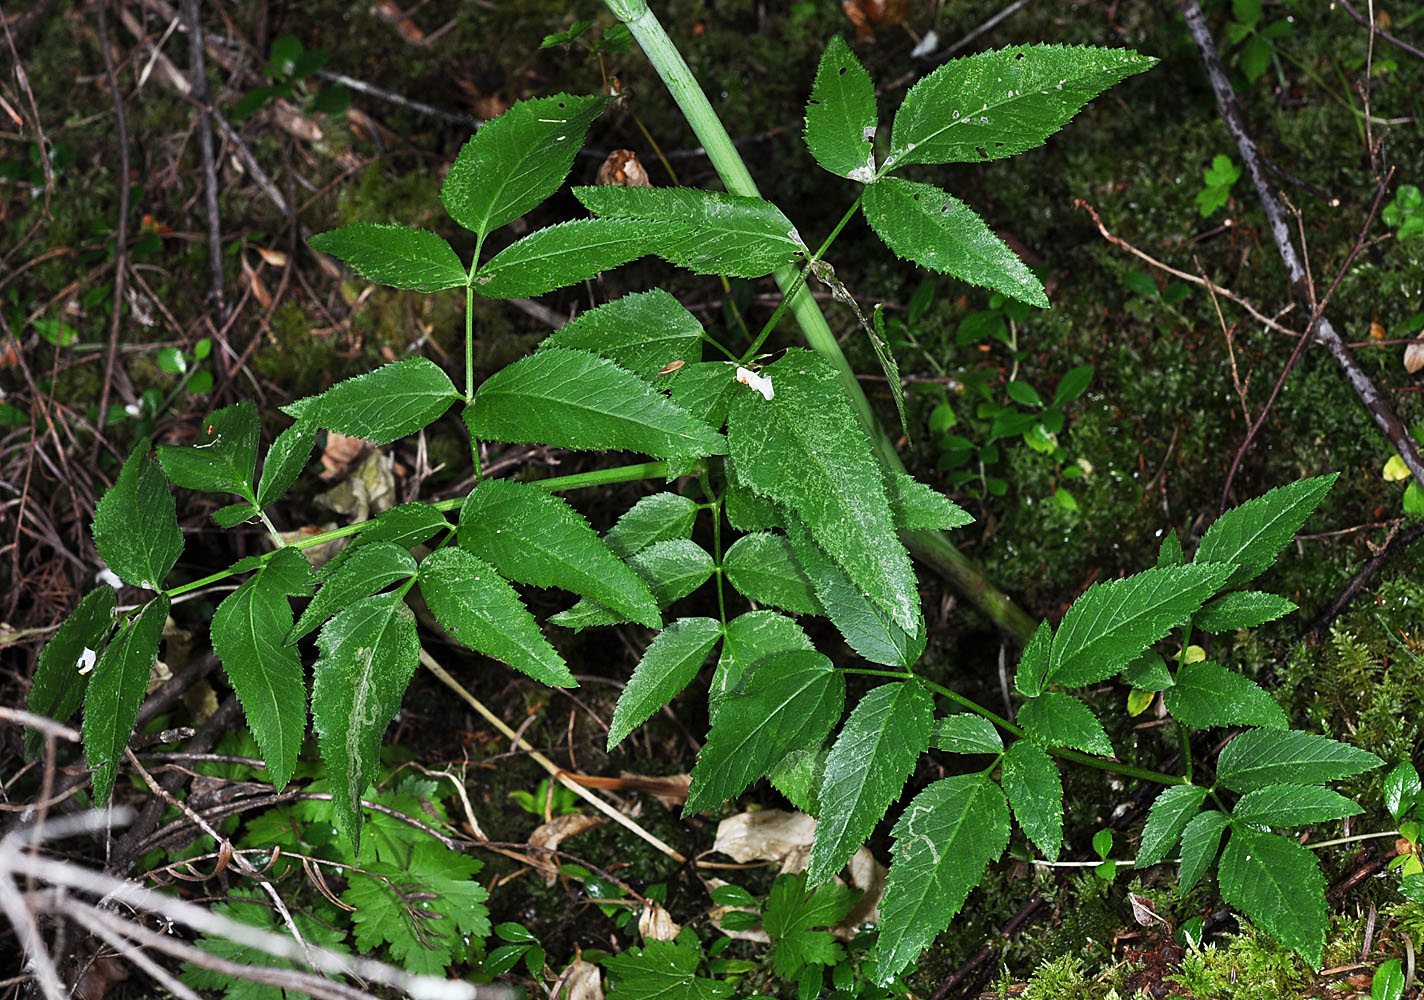 Flora of Eastern Washington Image: Angelica arguta